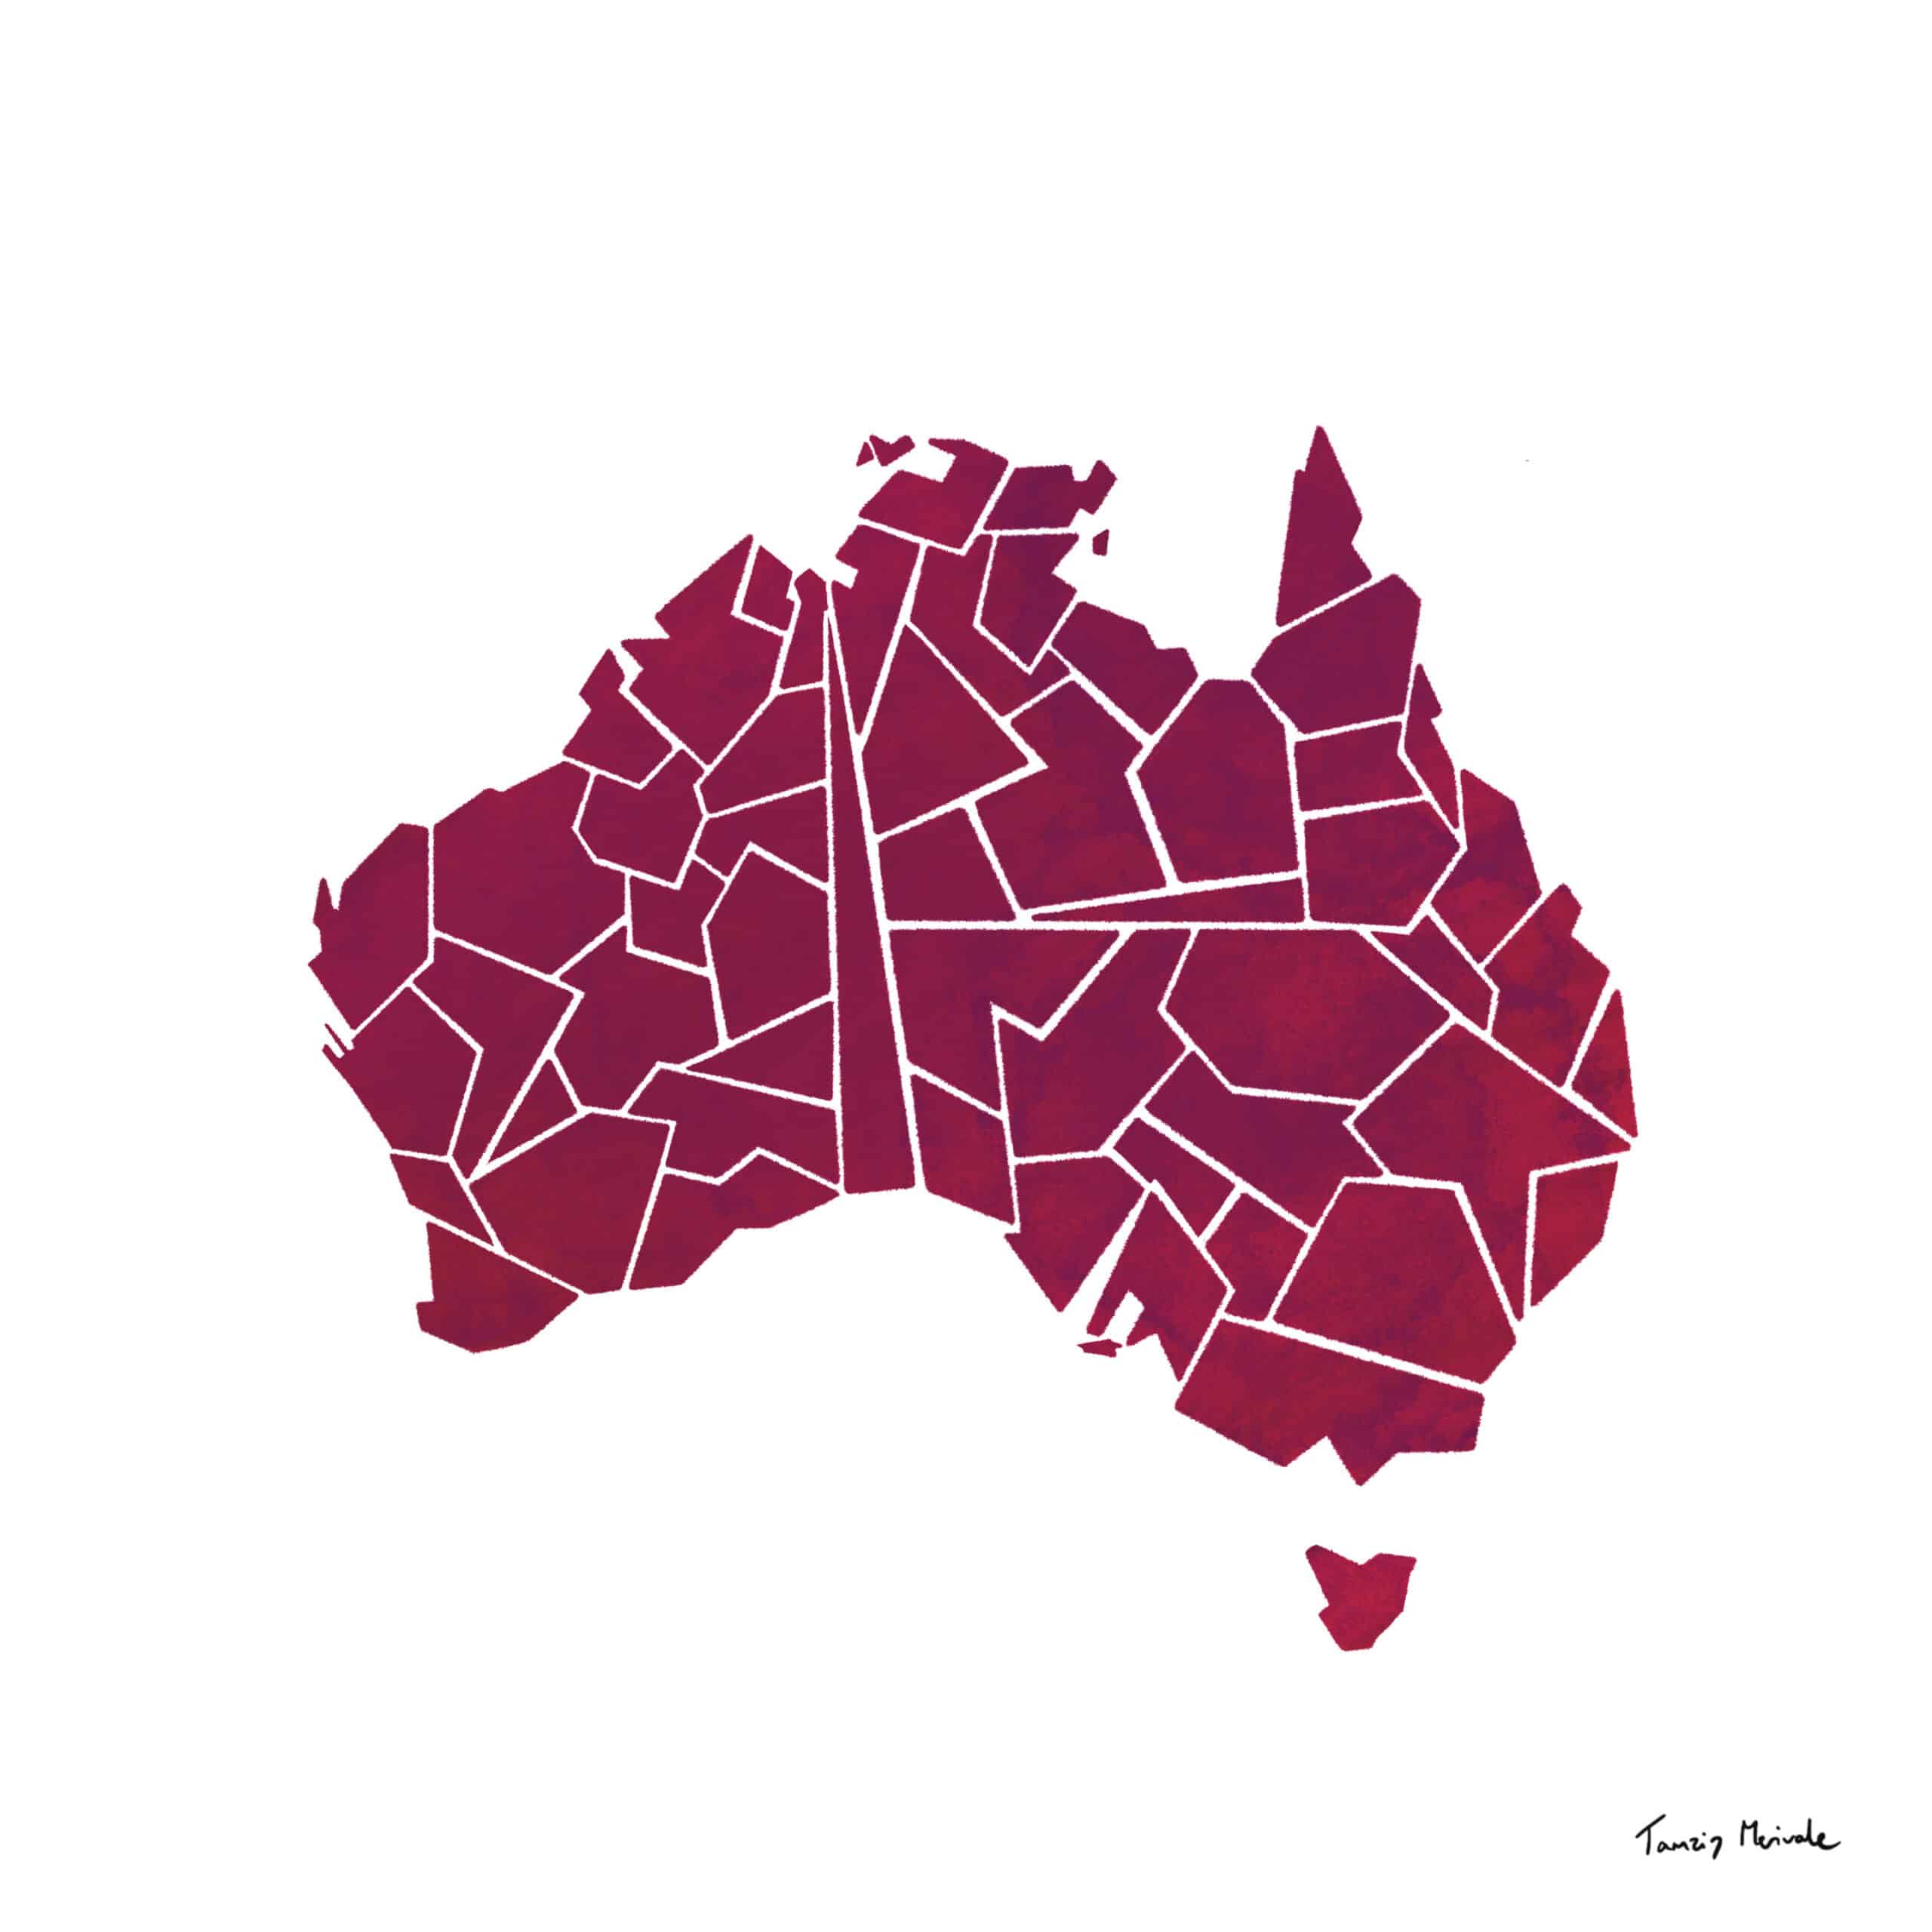 Illustrated map of Australia in dark pink/purple